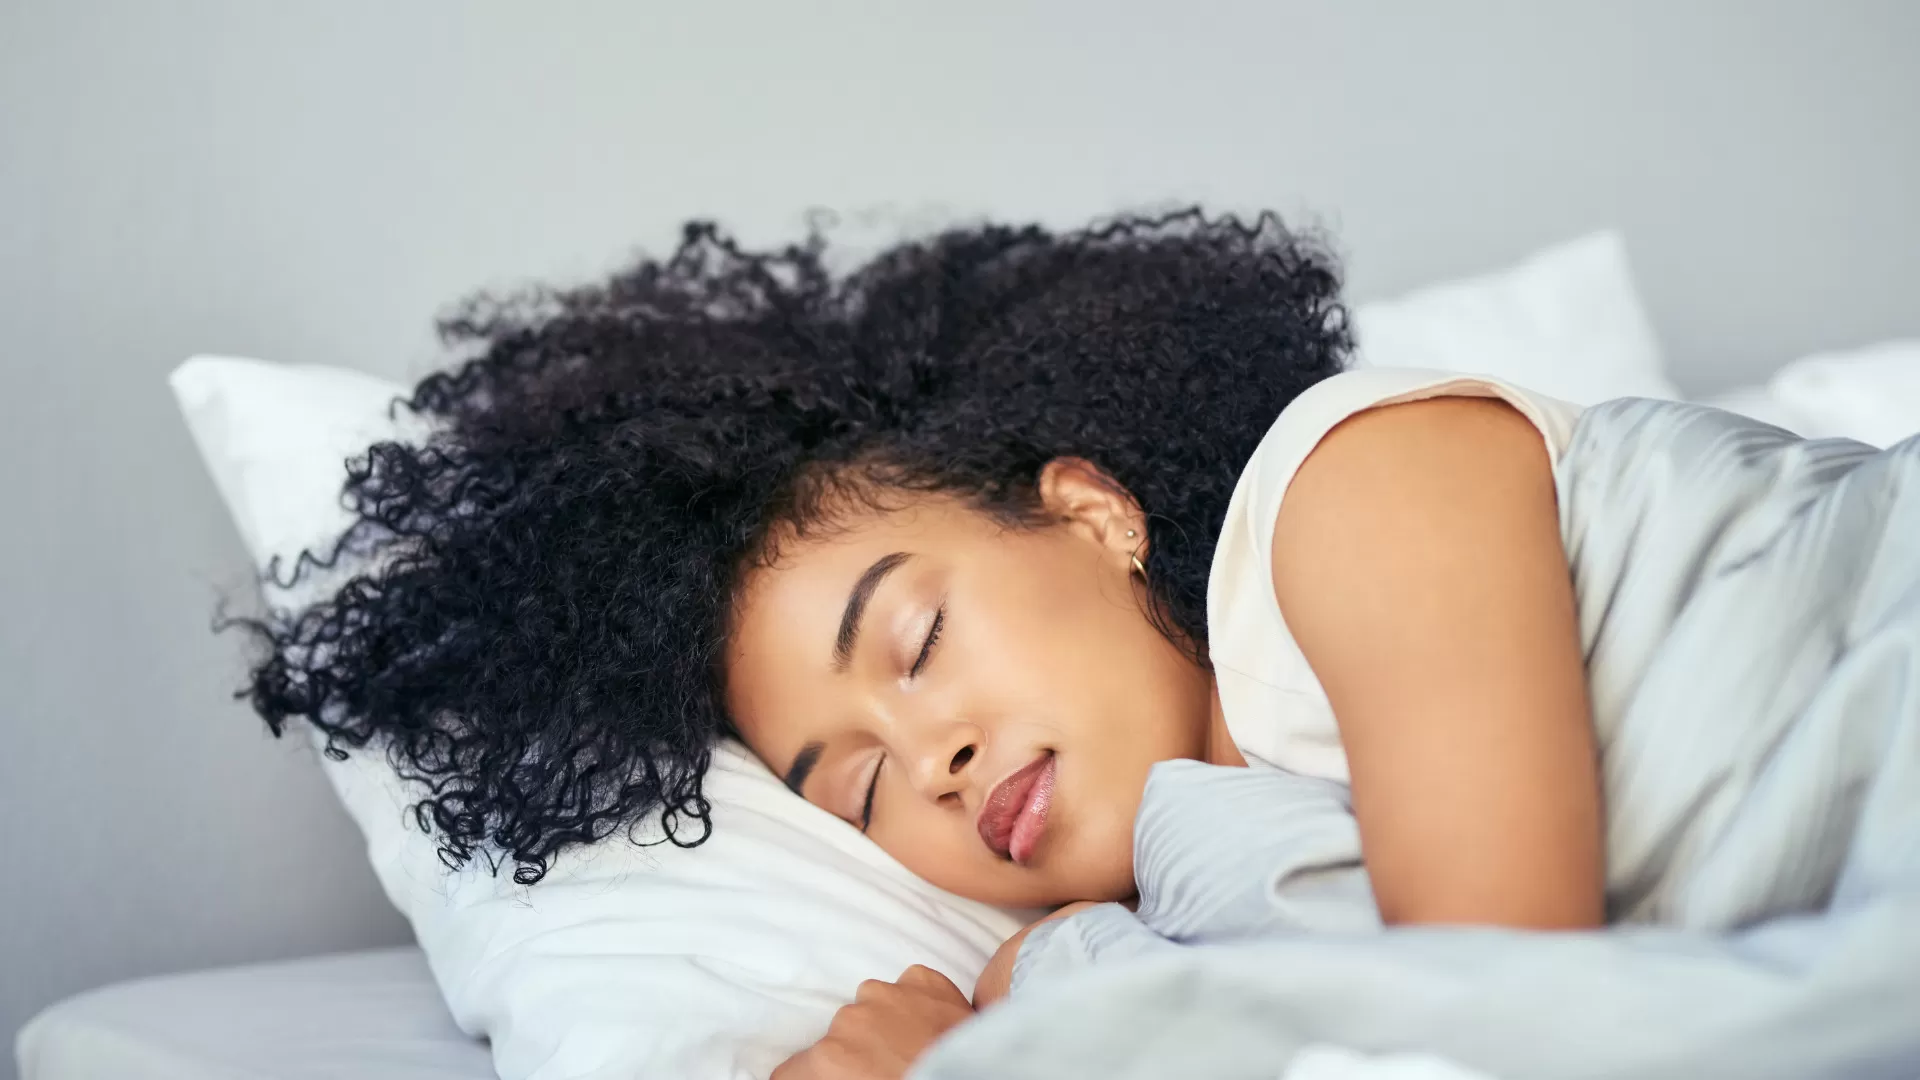 7 Effective Ways to Improve Your Sleep Quality